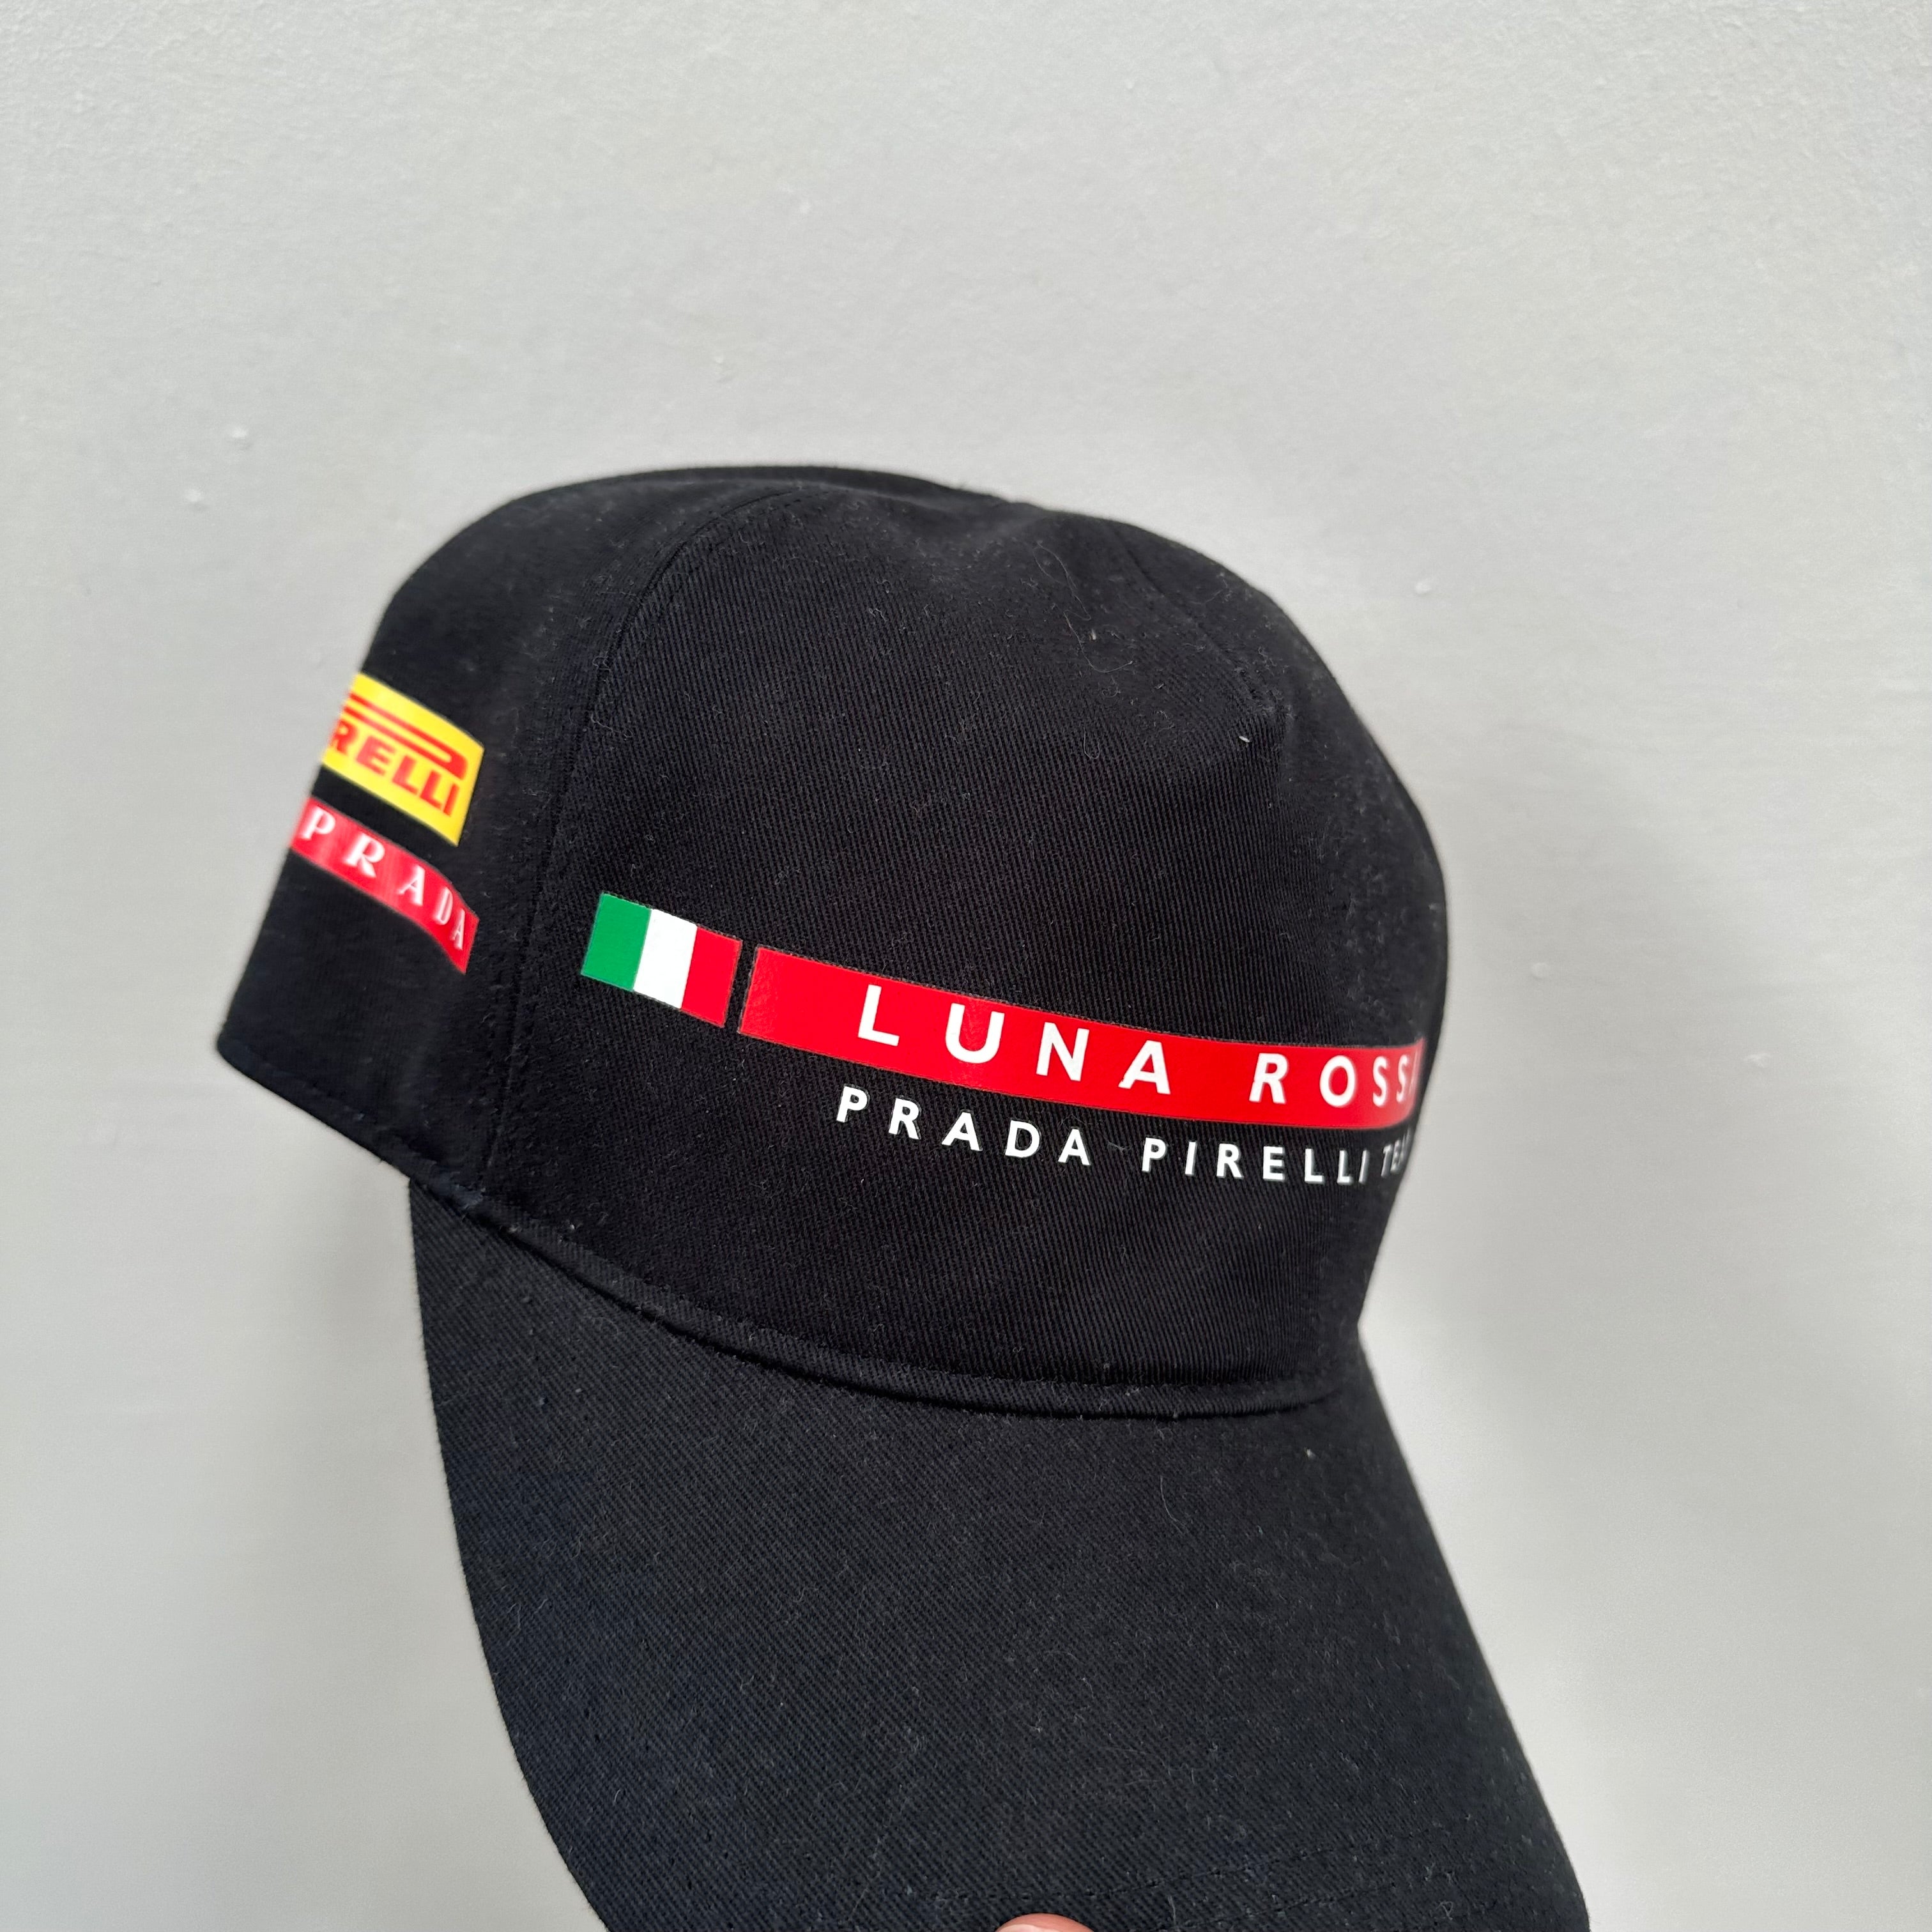 Prada Luna Rossa Logo Black Hat